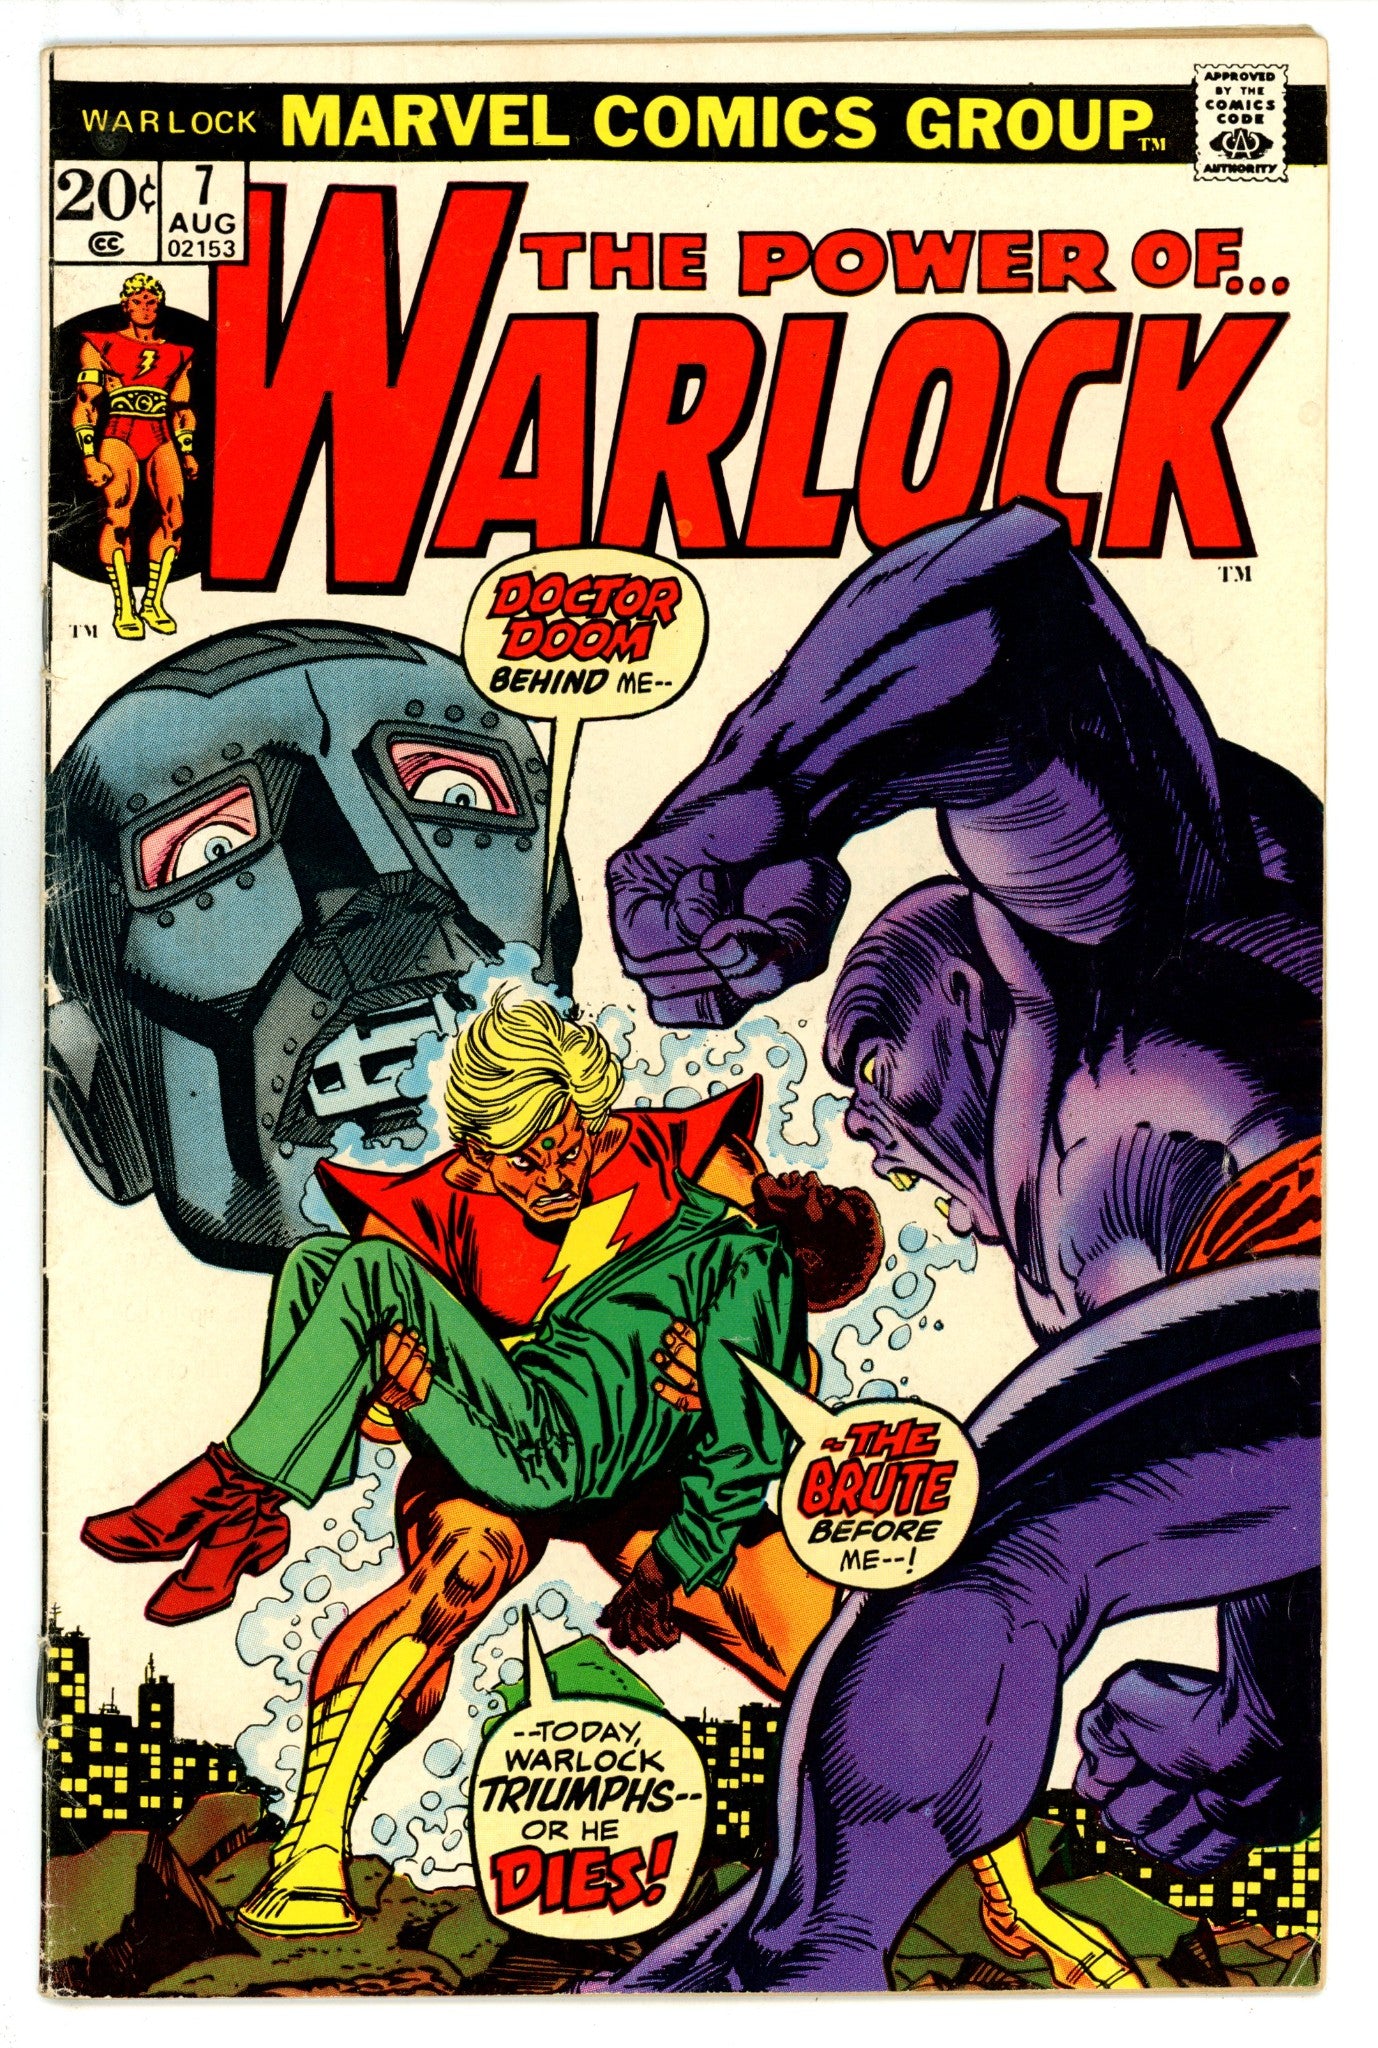 Warlock Vol 1 7 VG- (3.5) (1973) 